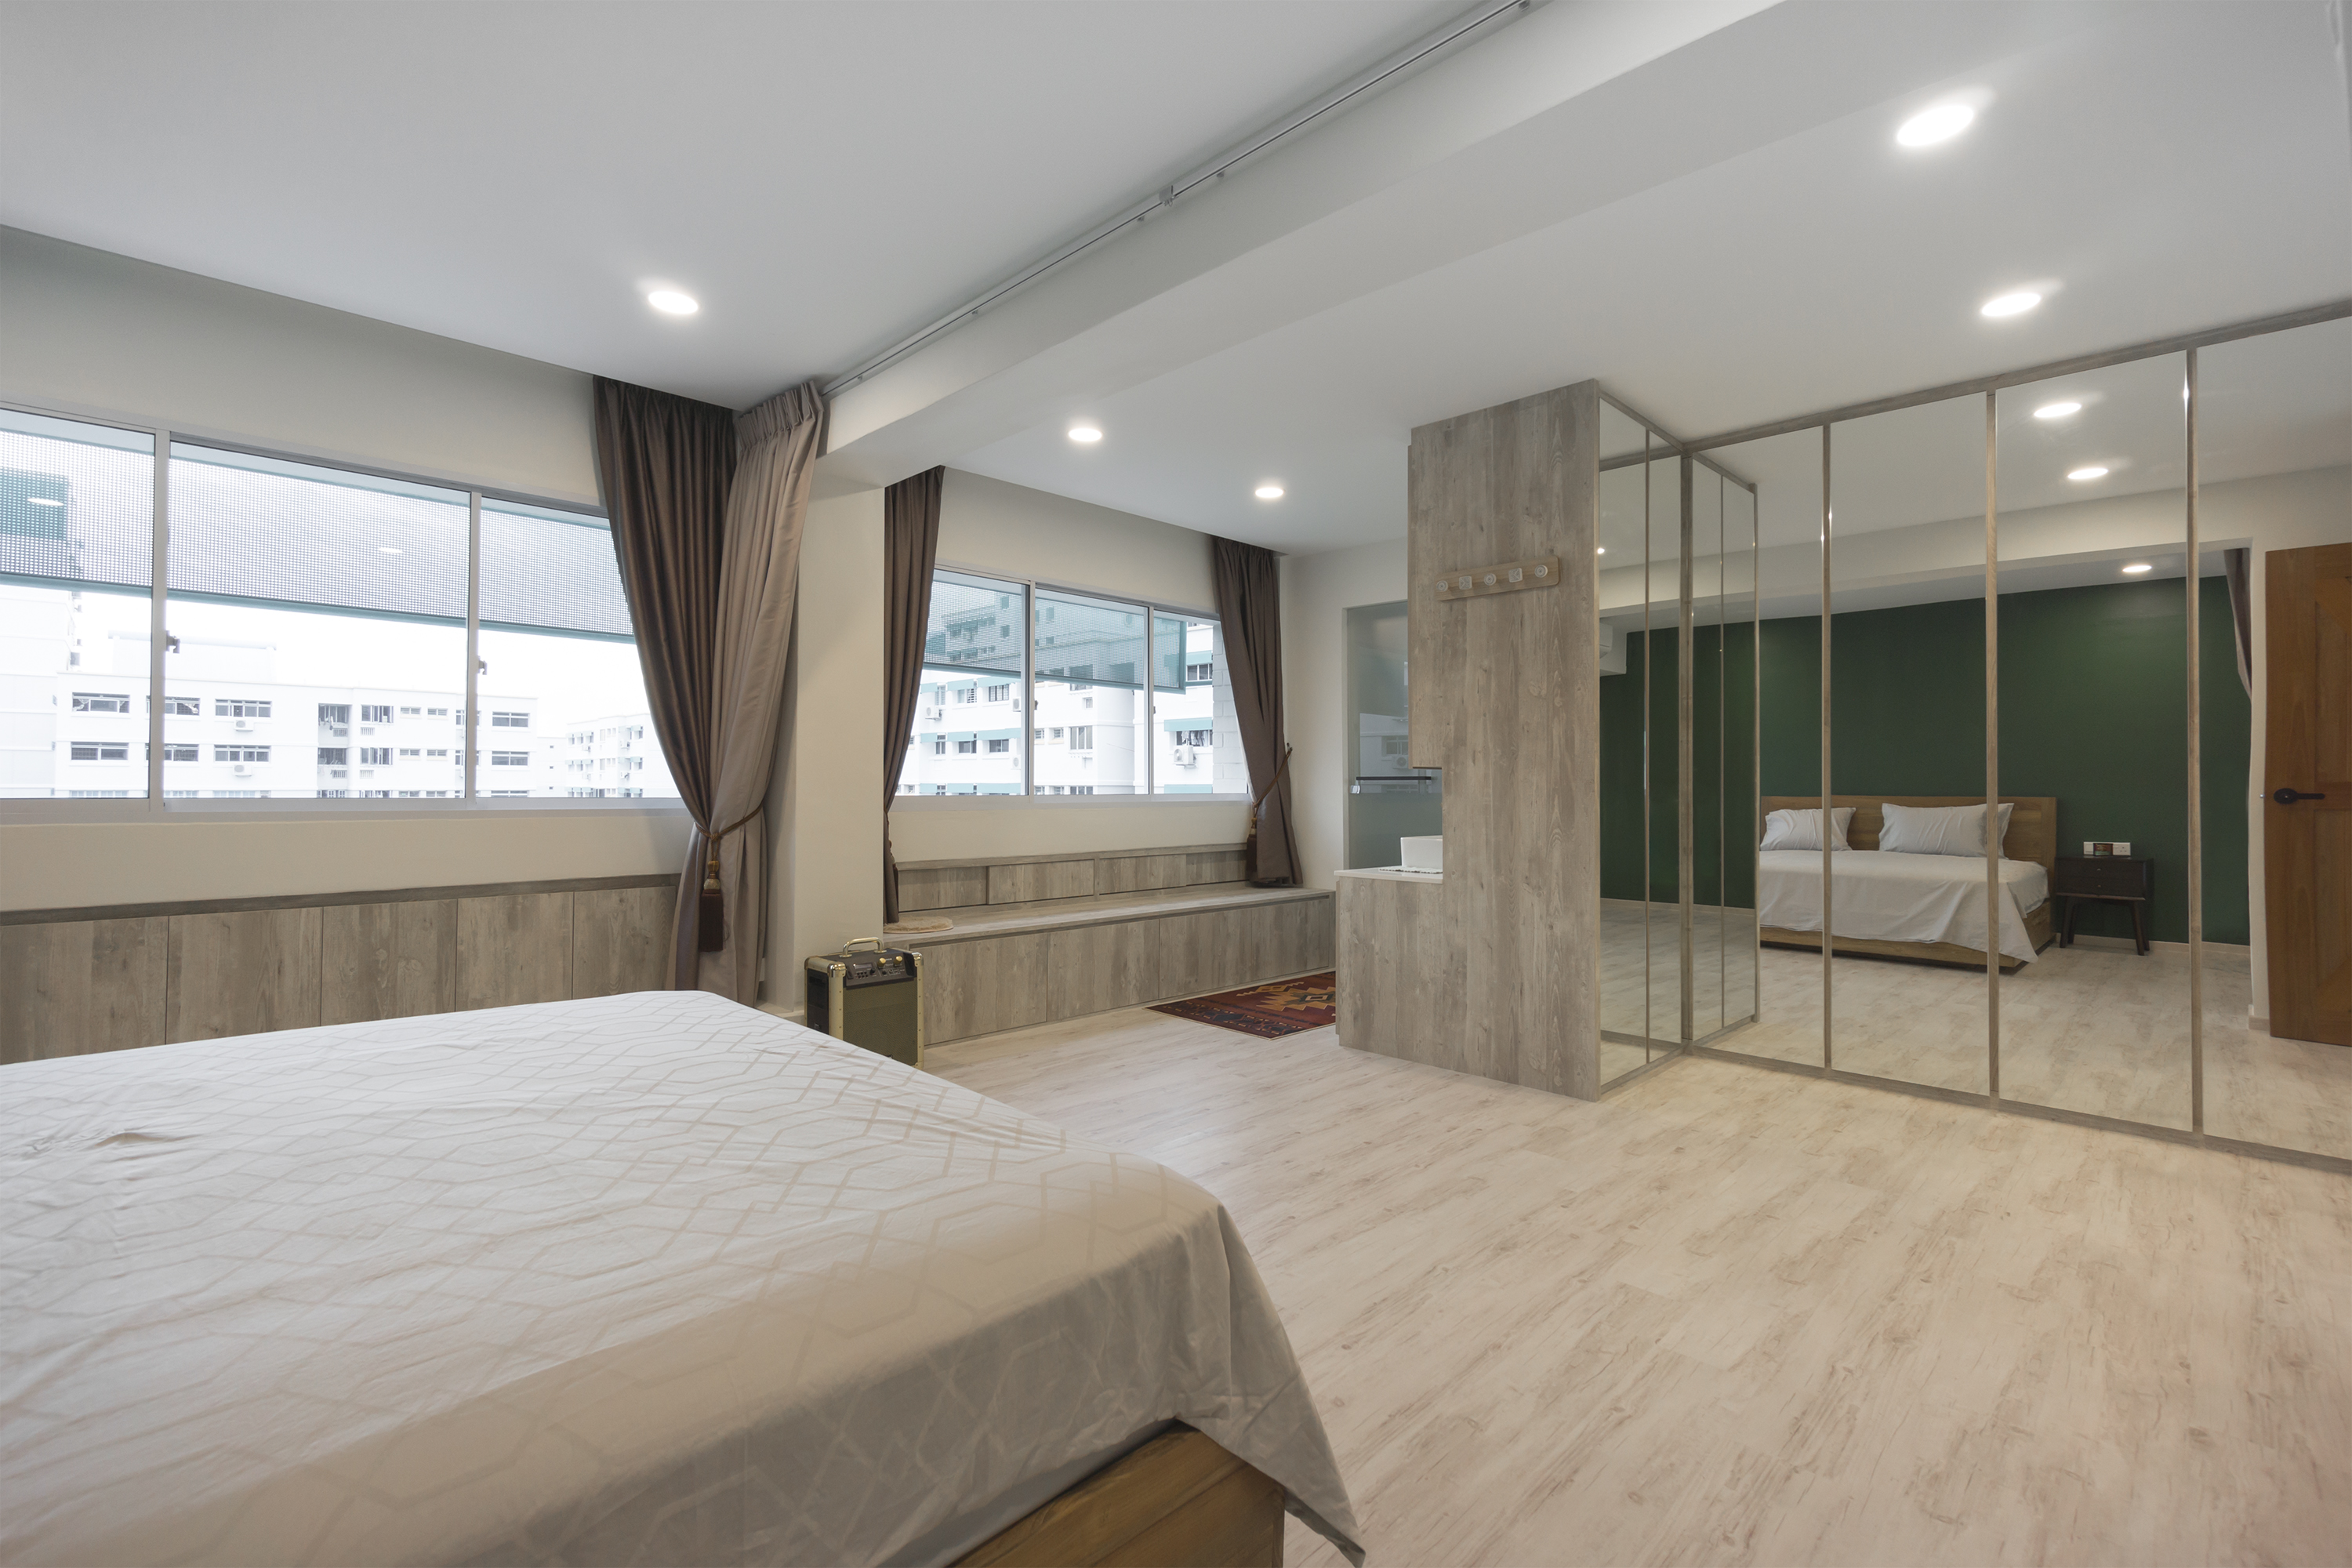 Country, Rustic Design - Bedroom - HDB 5 Room - Design by Flo Design Pte Ltd